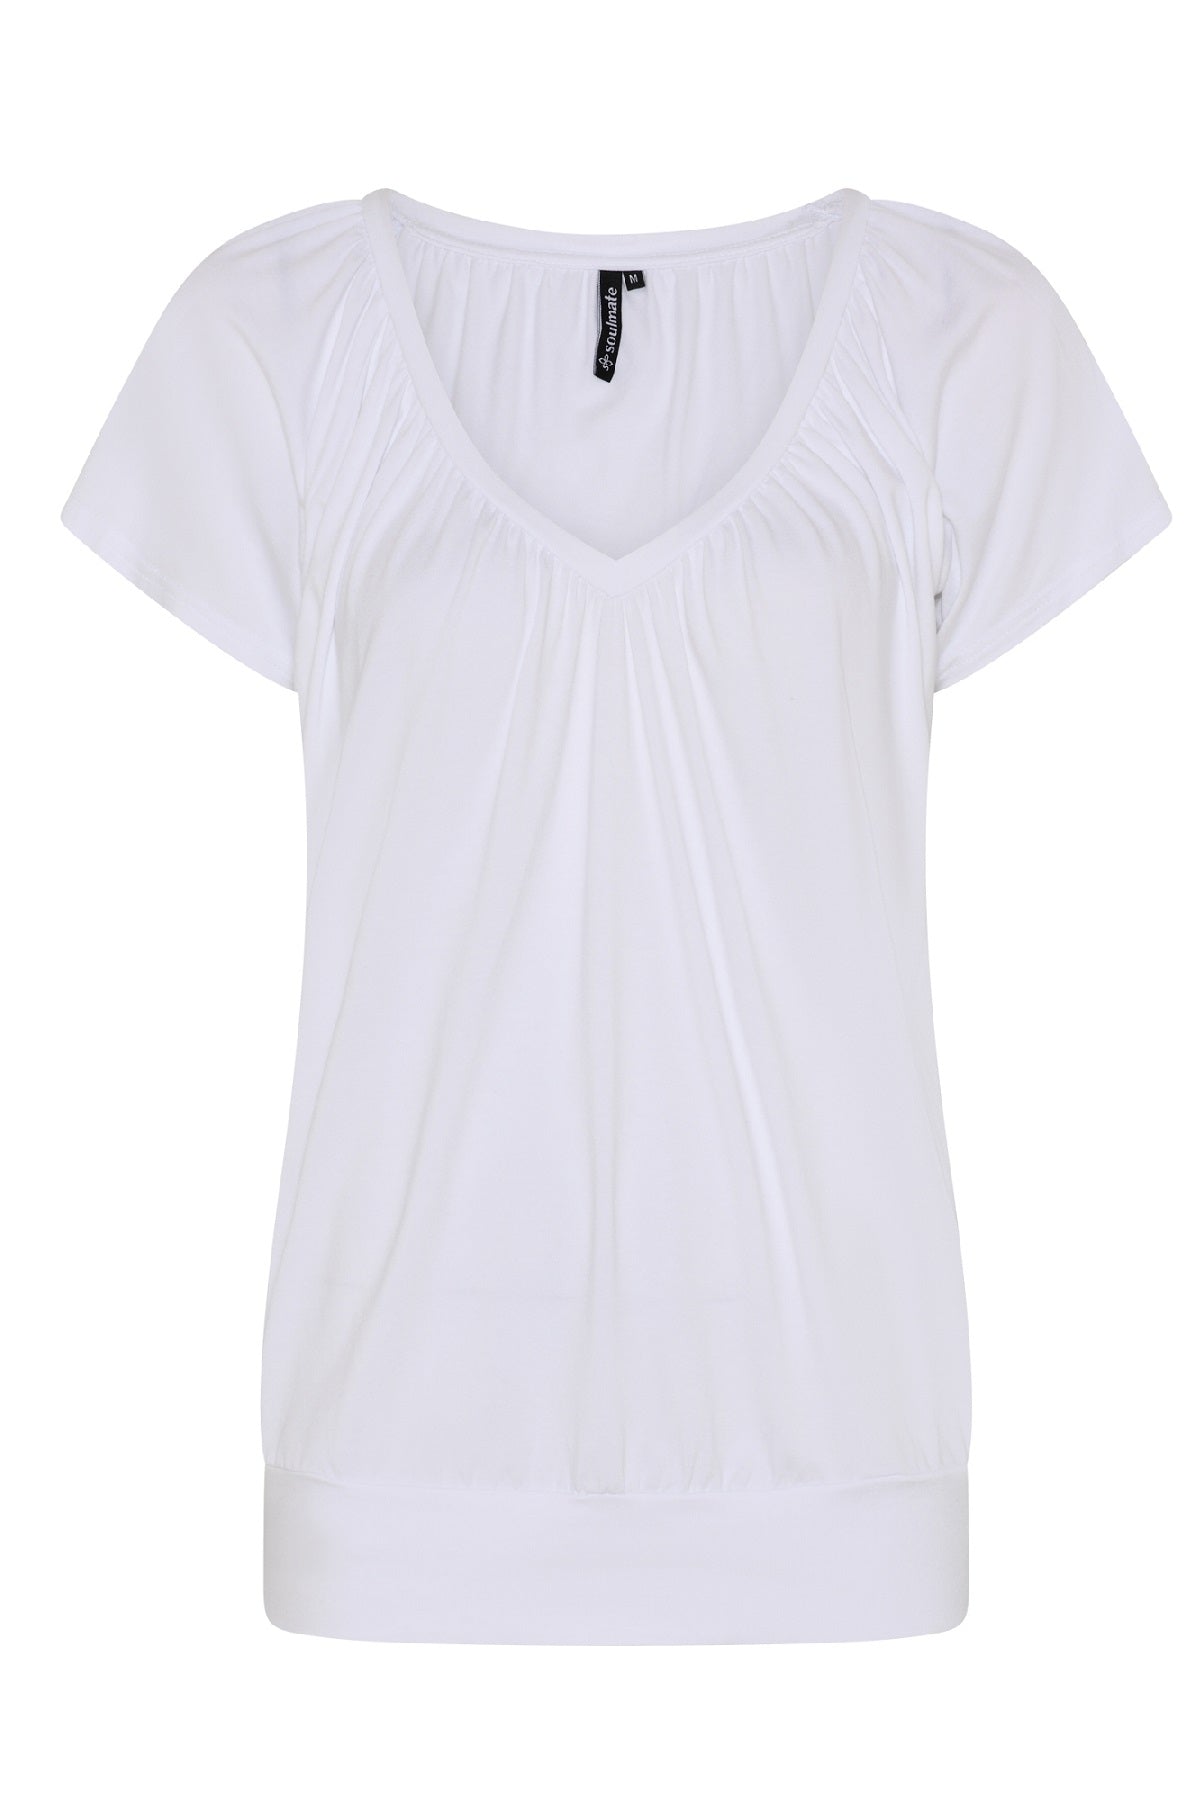 Soulmate Elma t-shirt, White